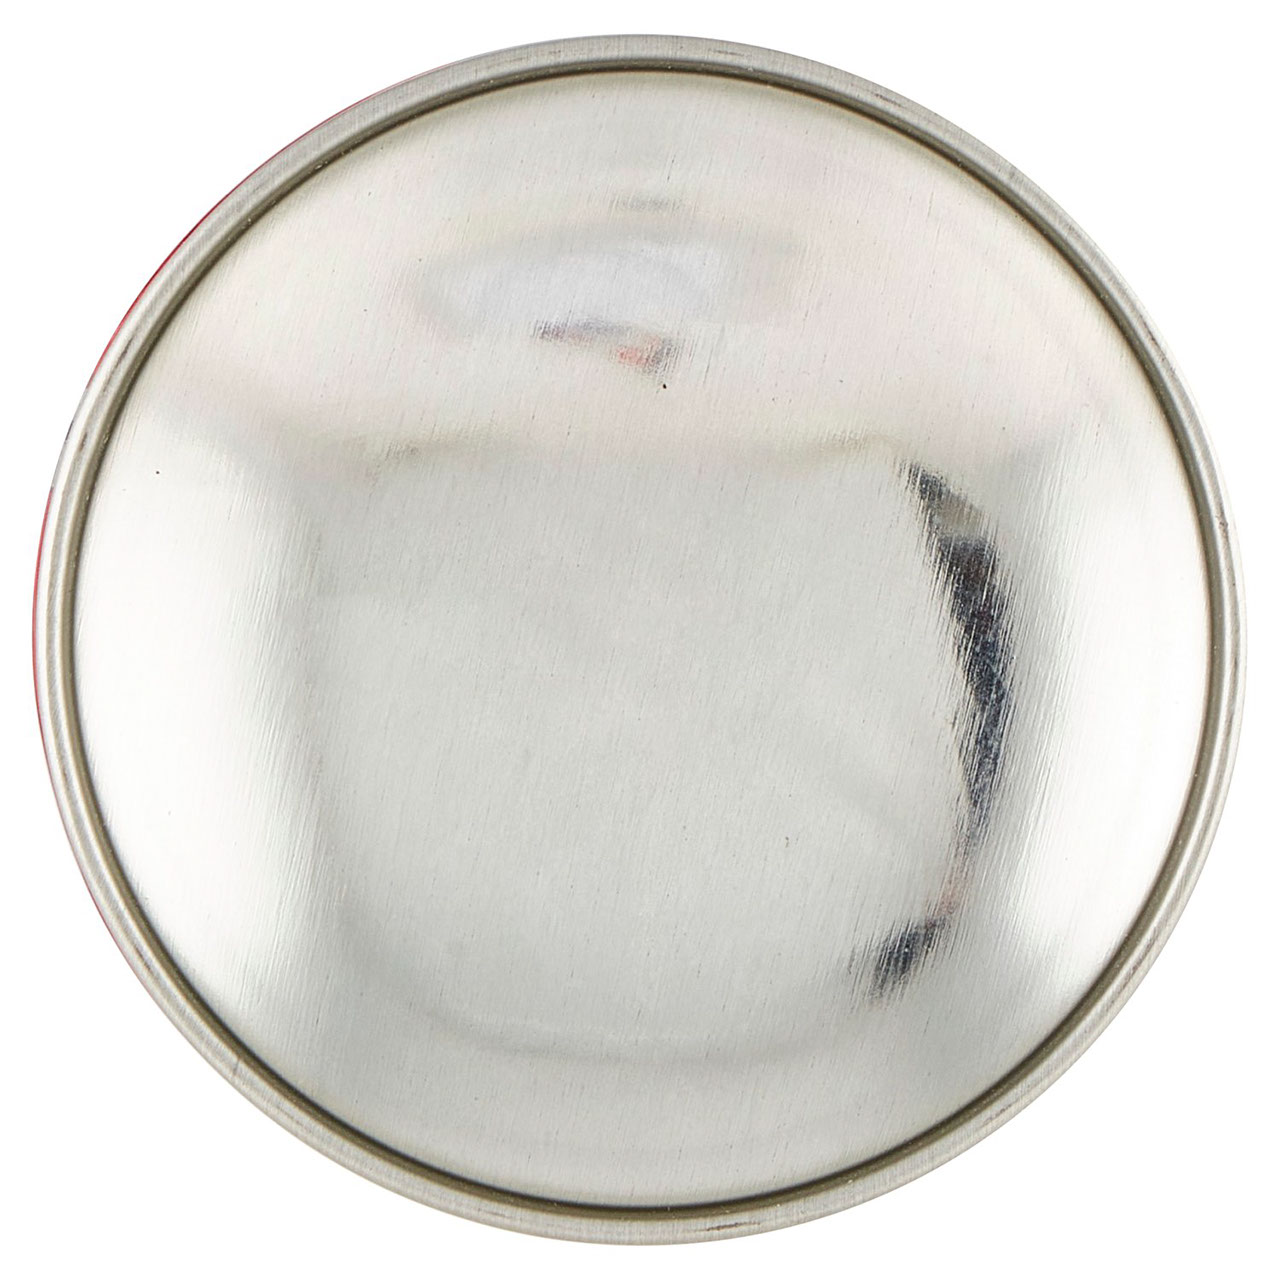 Malizia Uomo Musk Eau de Toilette Deodorant 150 mL